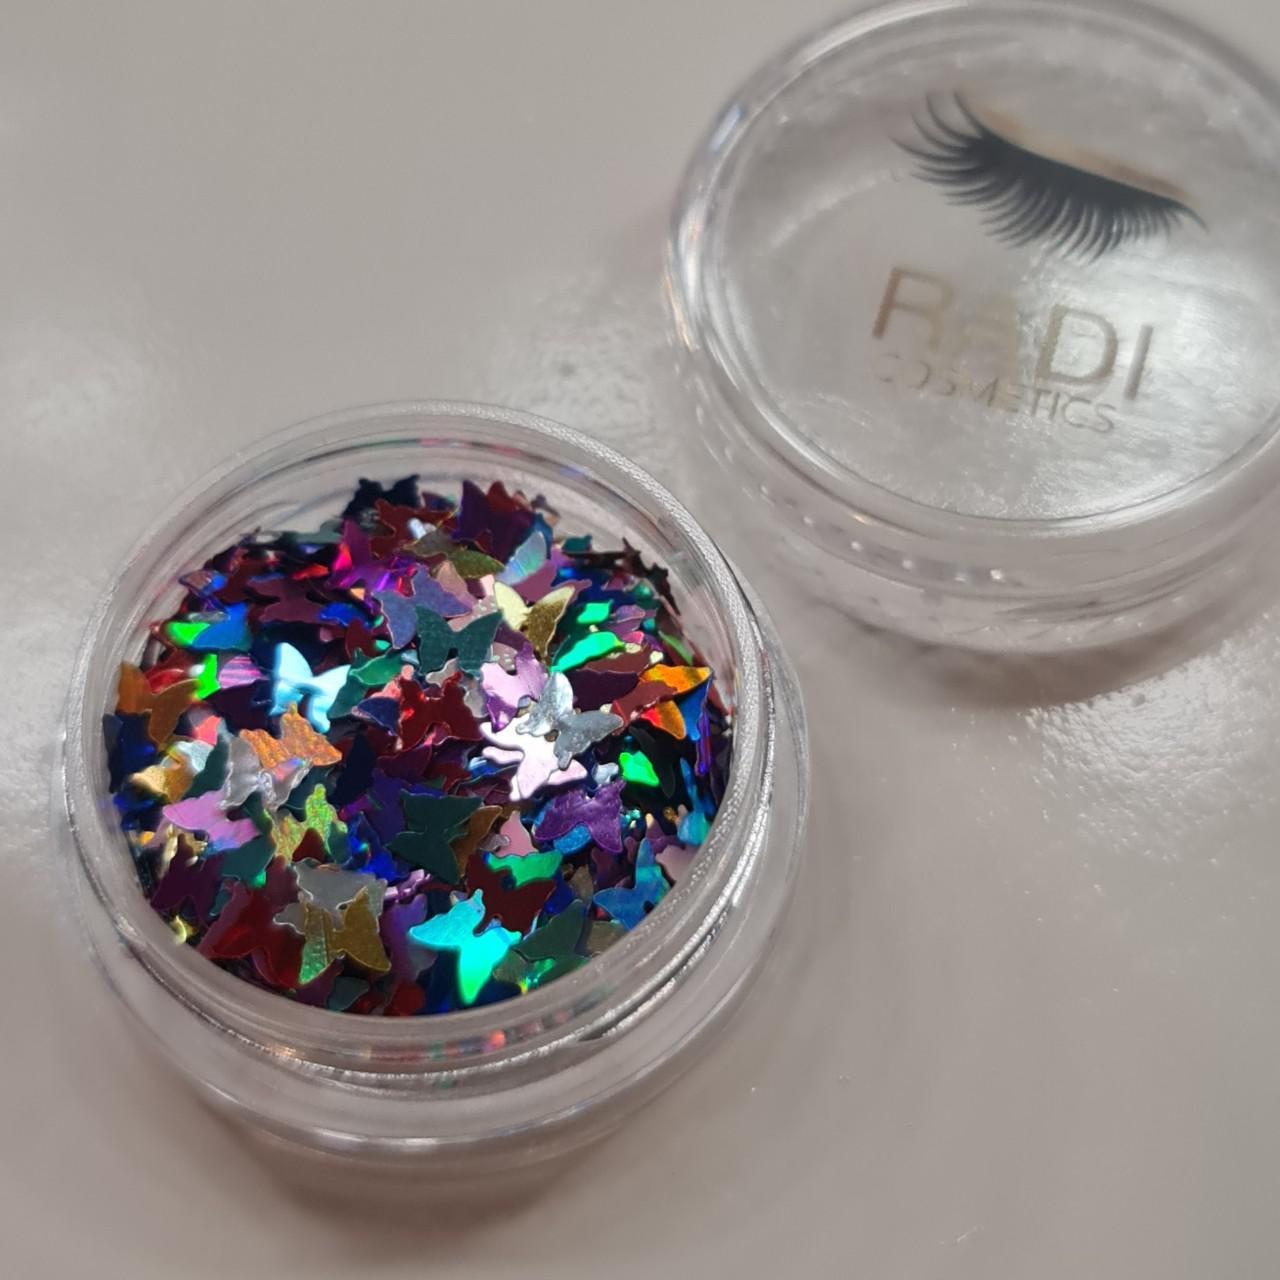 Product Image 1 - Loose glitter multicolour butterflys pot.
Suitable